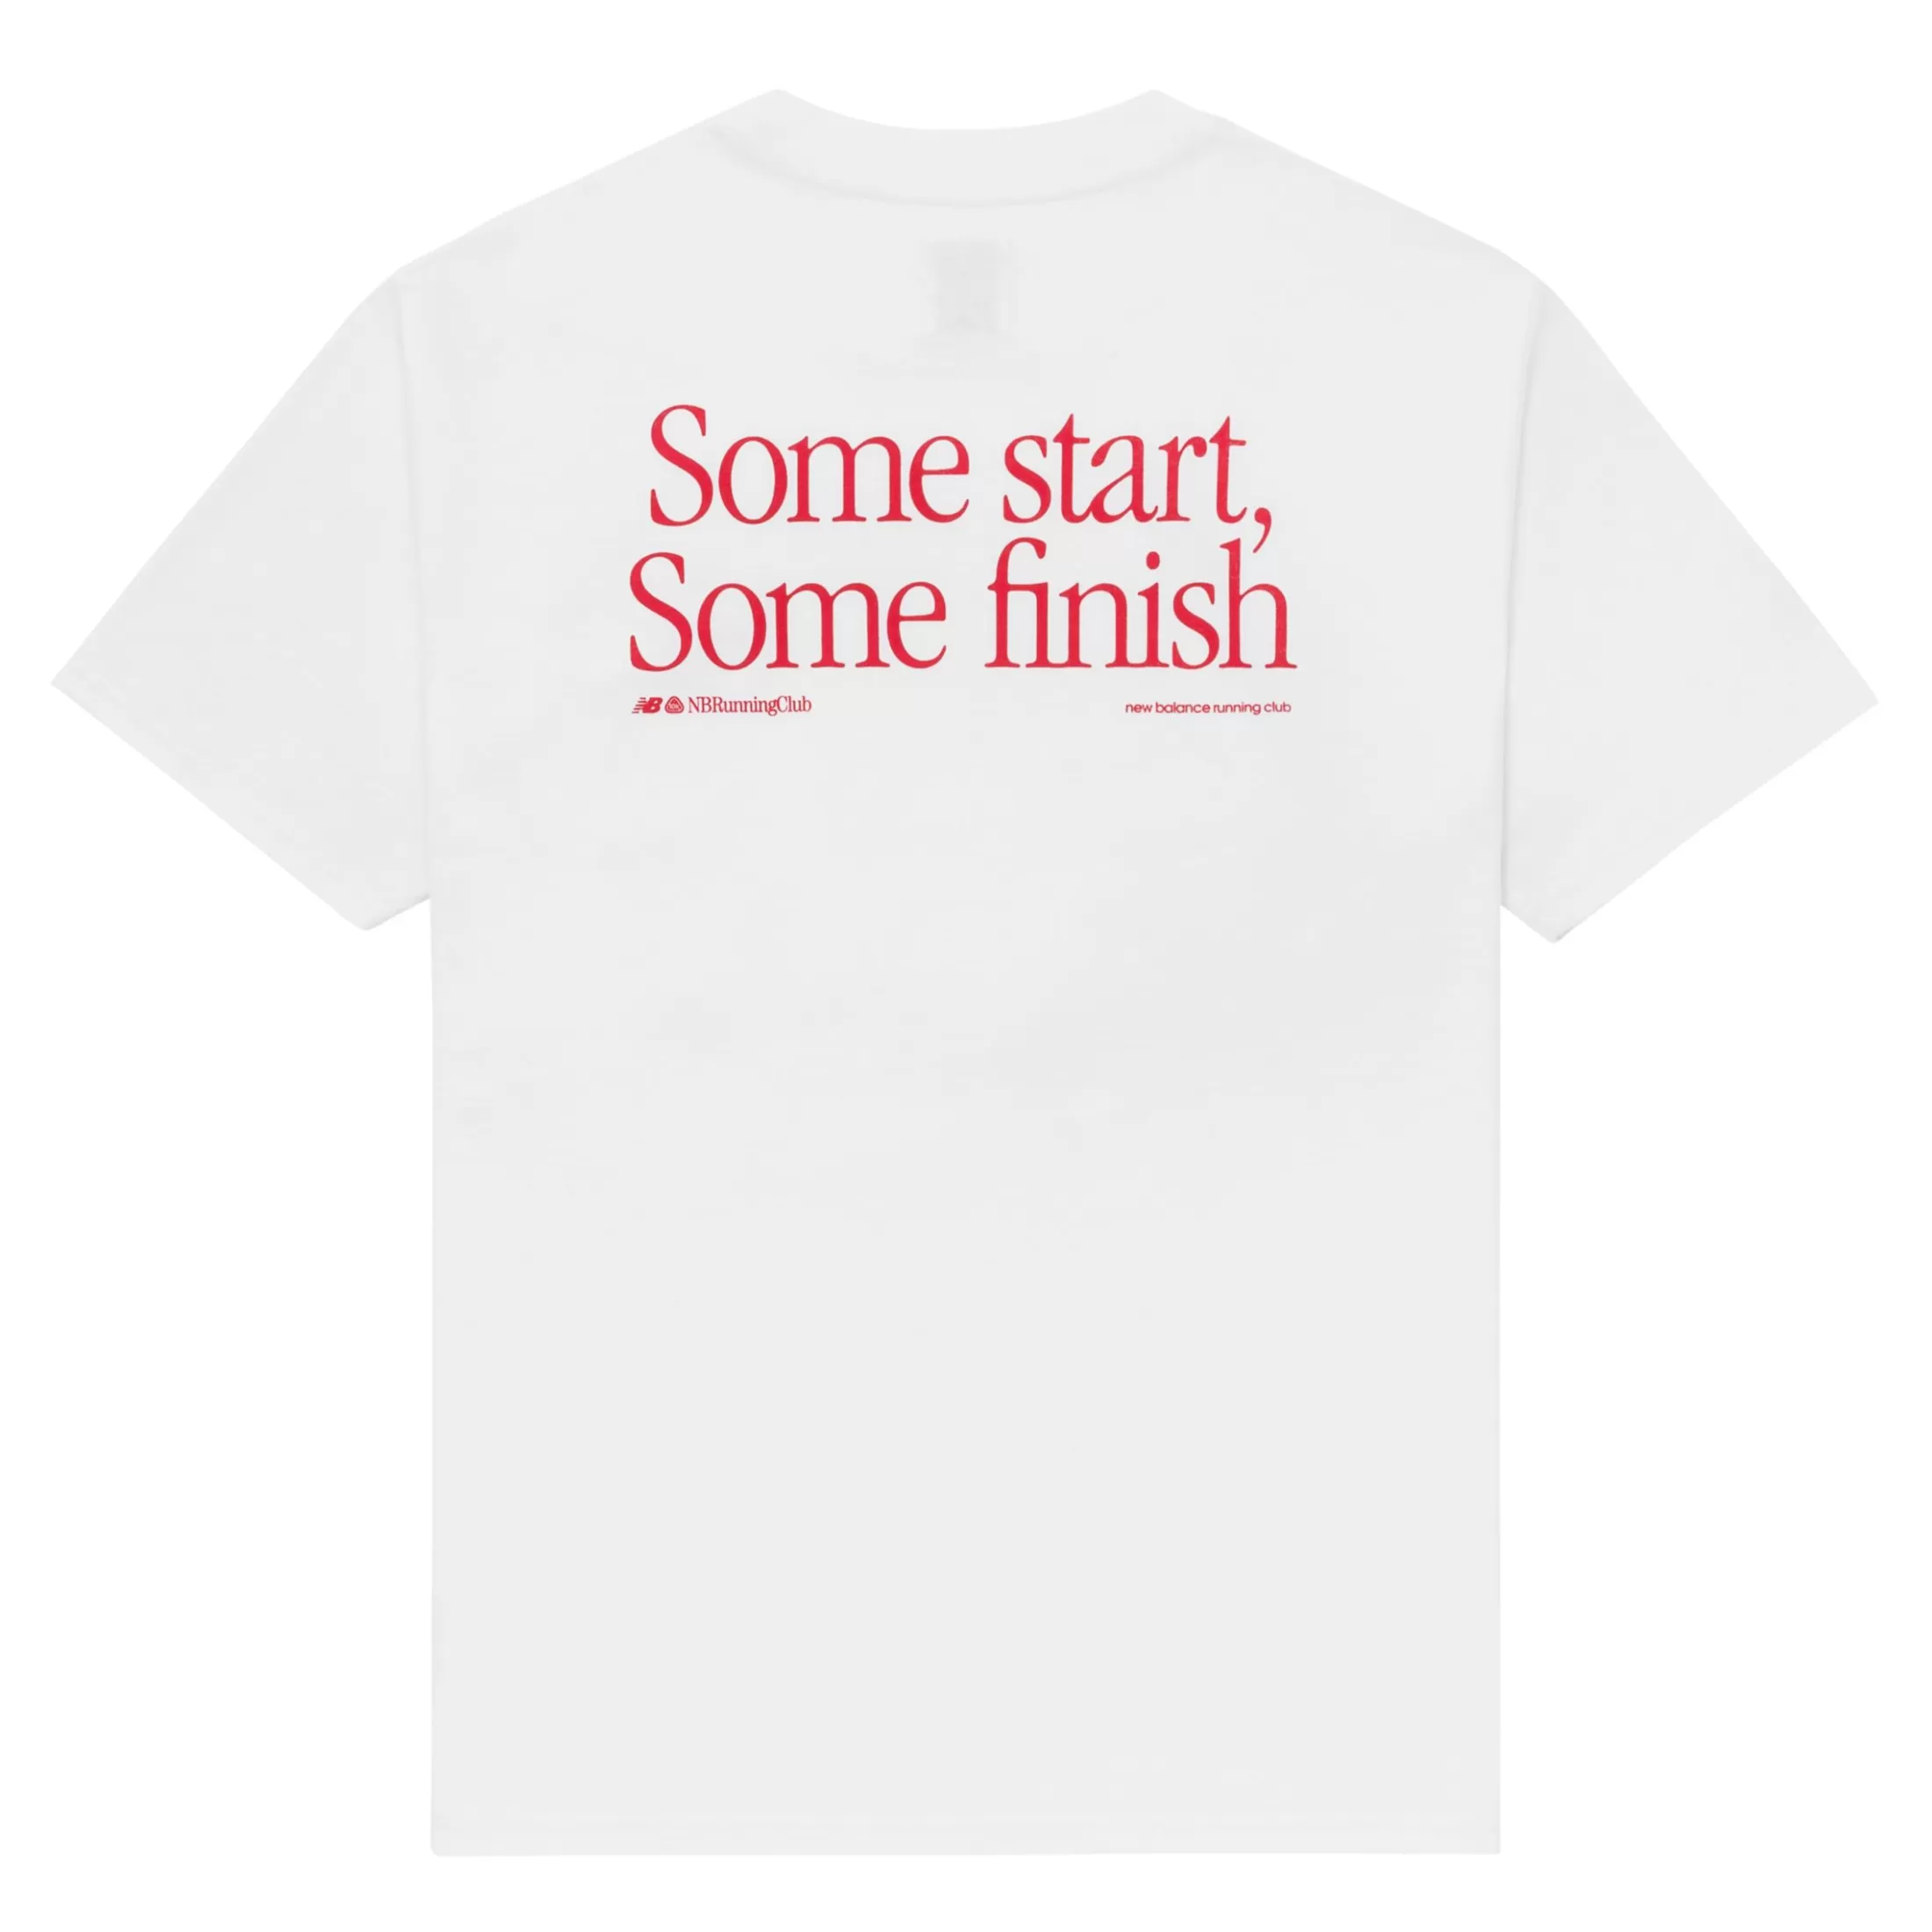 Shop Homens T-Shirt MADE in USA Run Club MULHER/HOMEN T-shirts e partes de cima